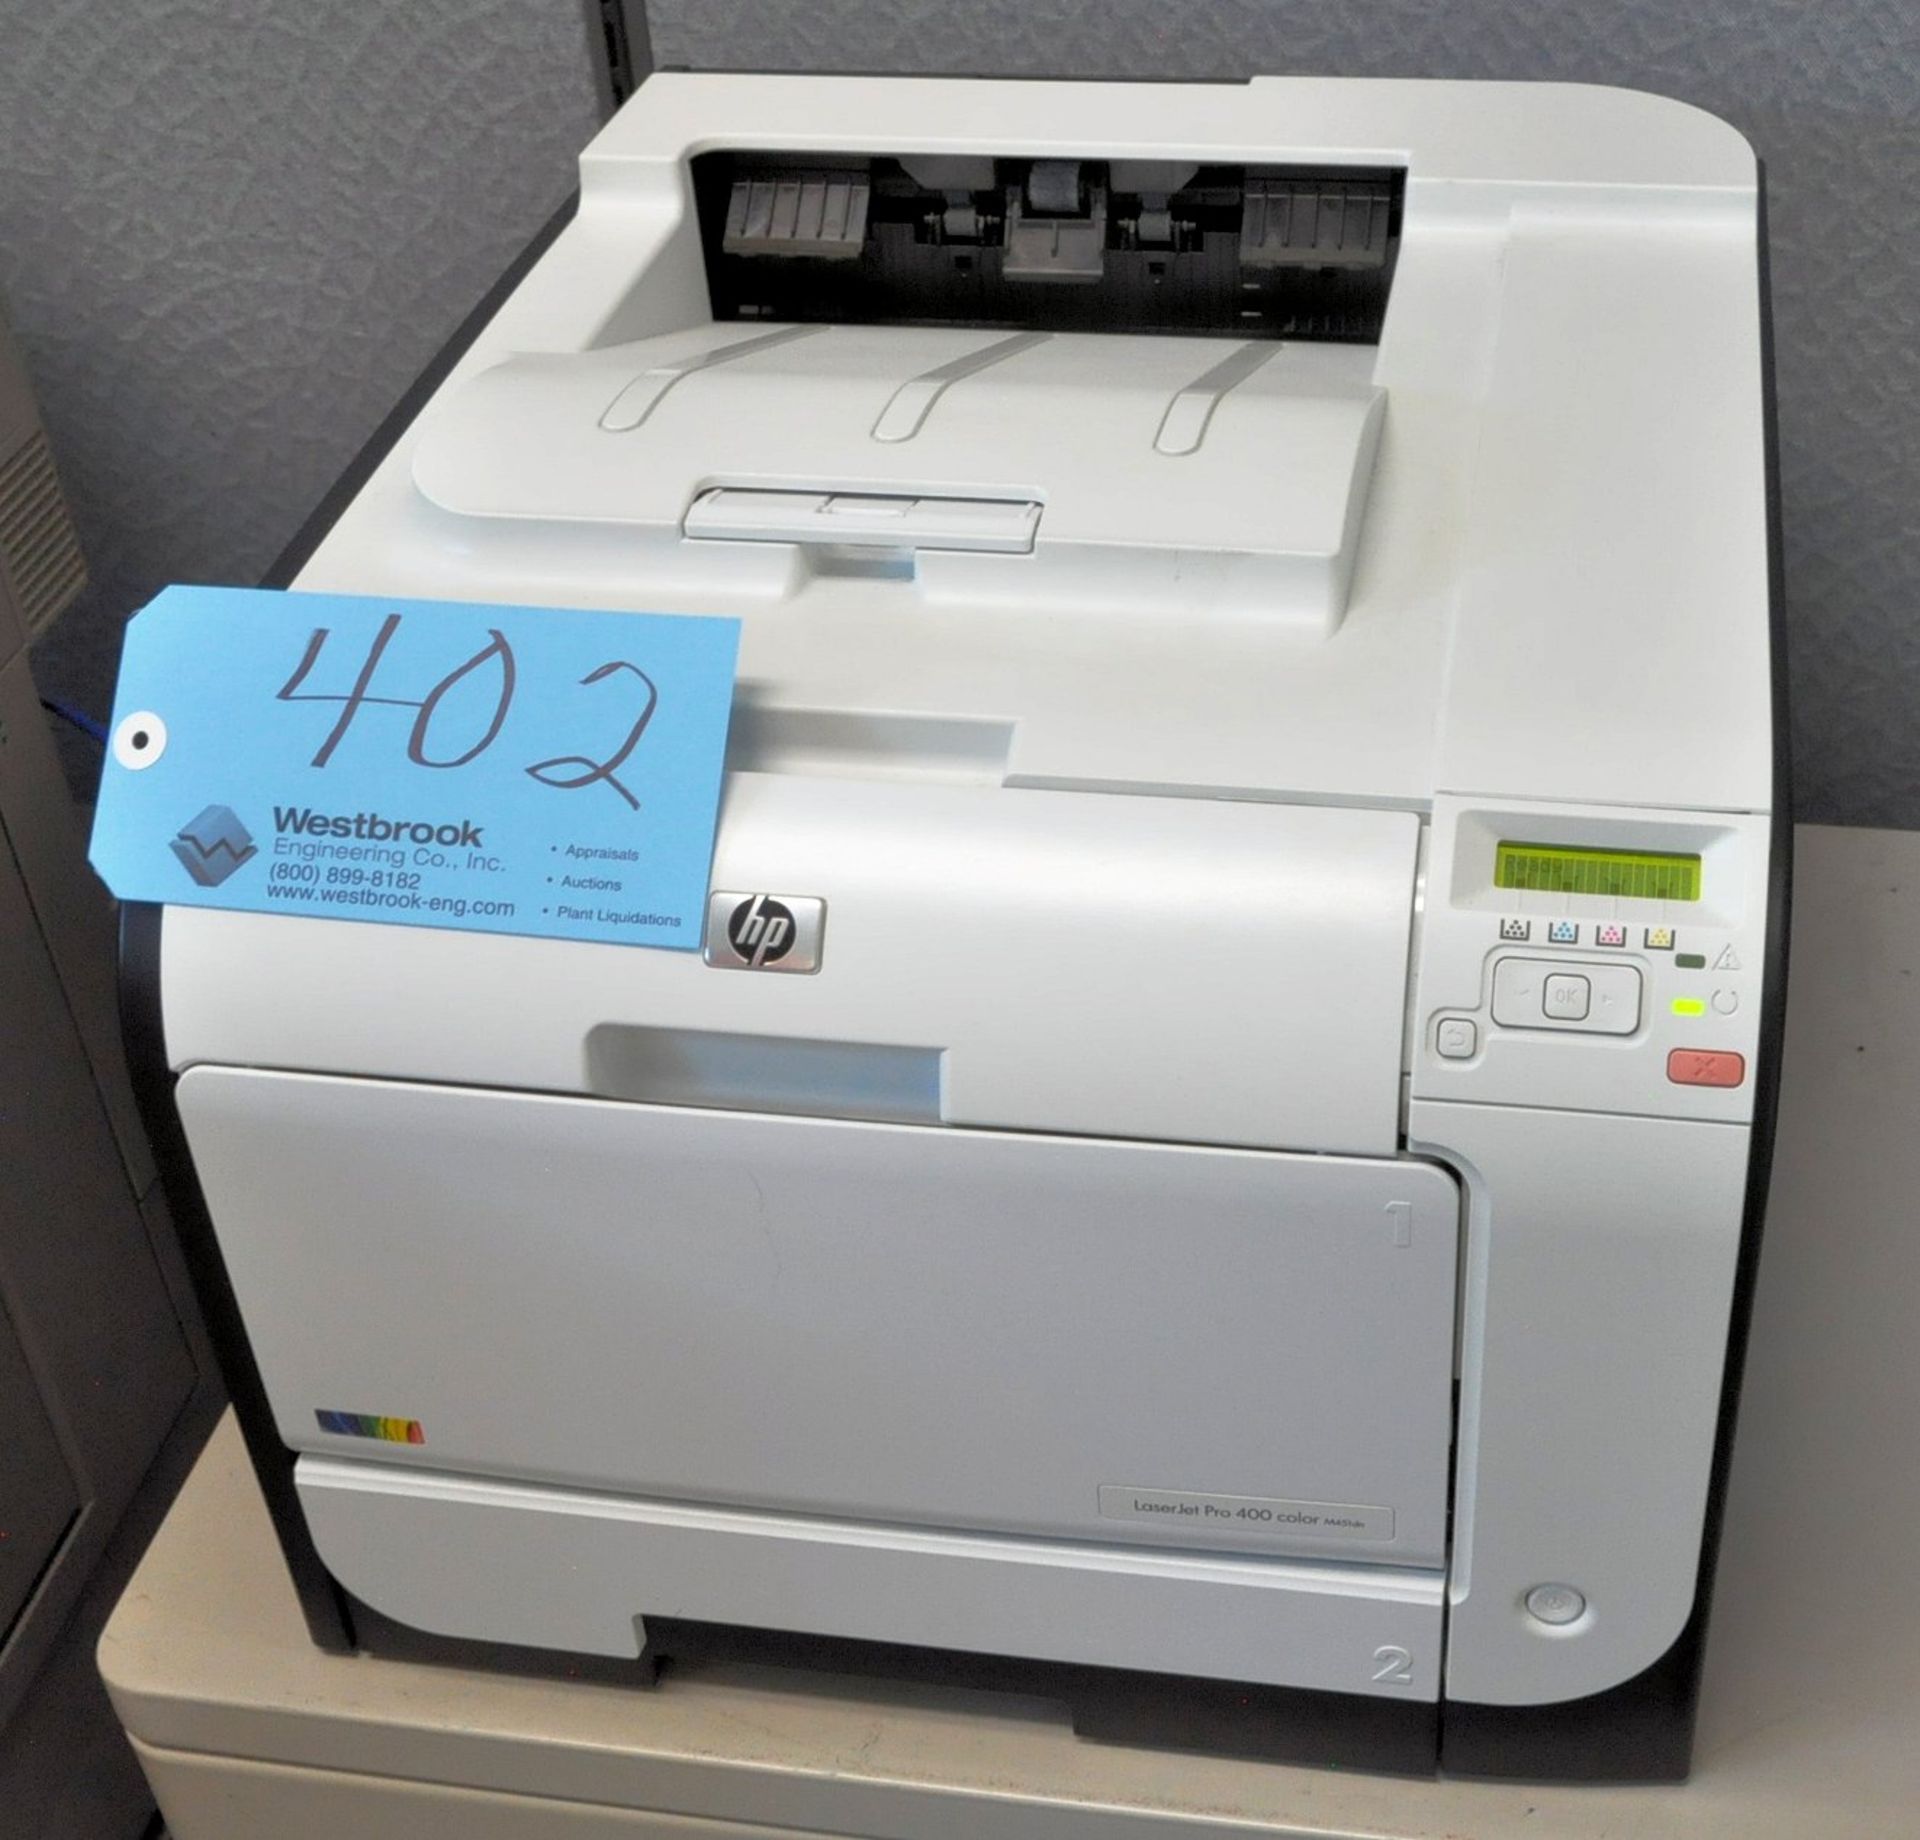 HP Laserjet Pro 400 Color Printer and Brother MFC 7340 Printer,